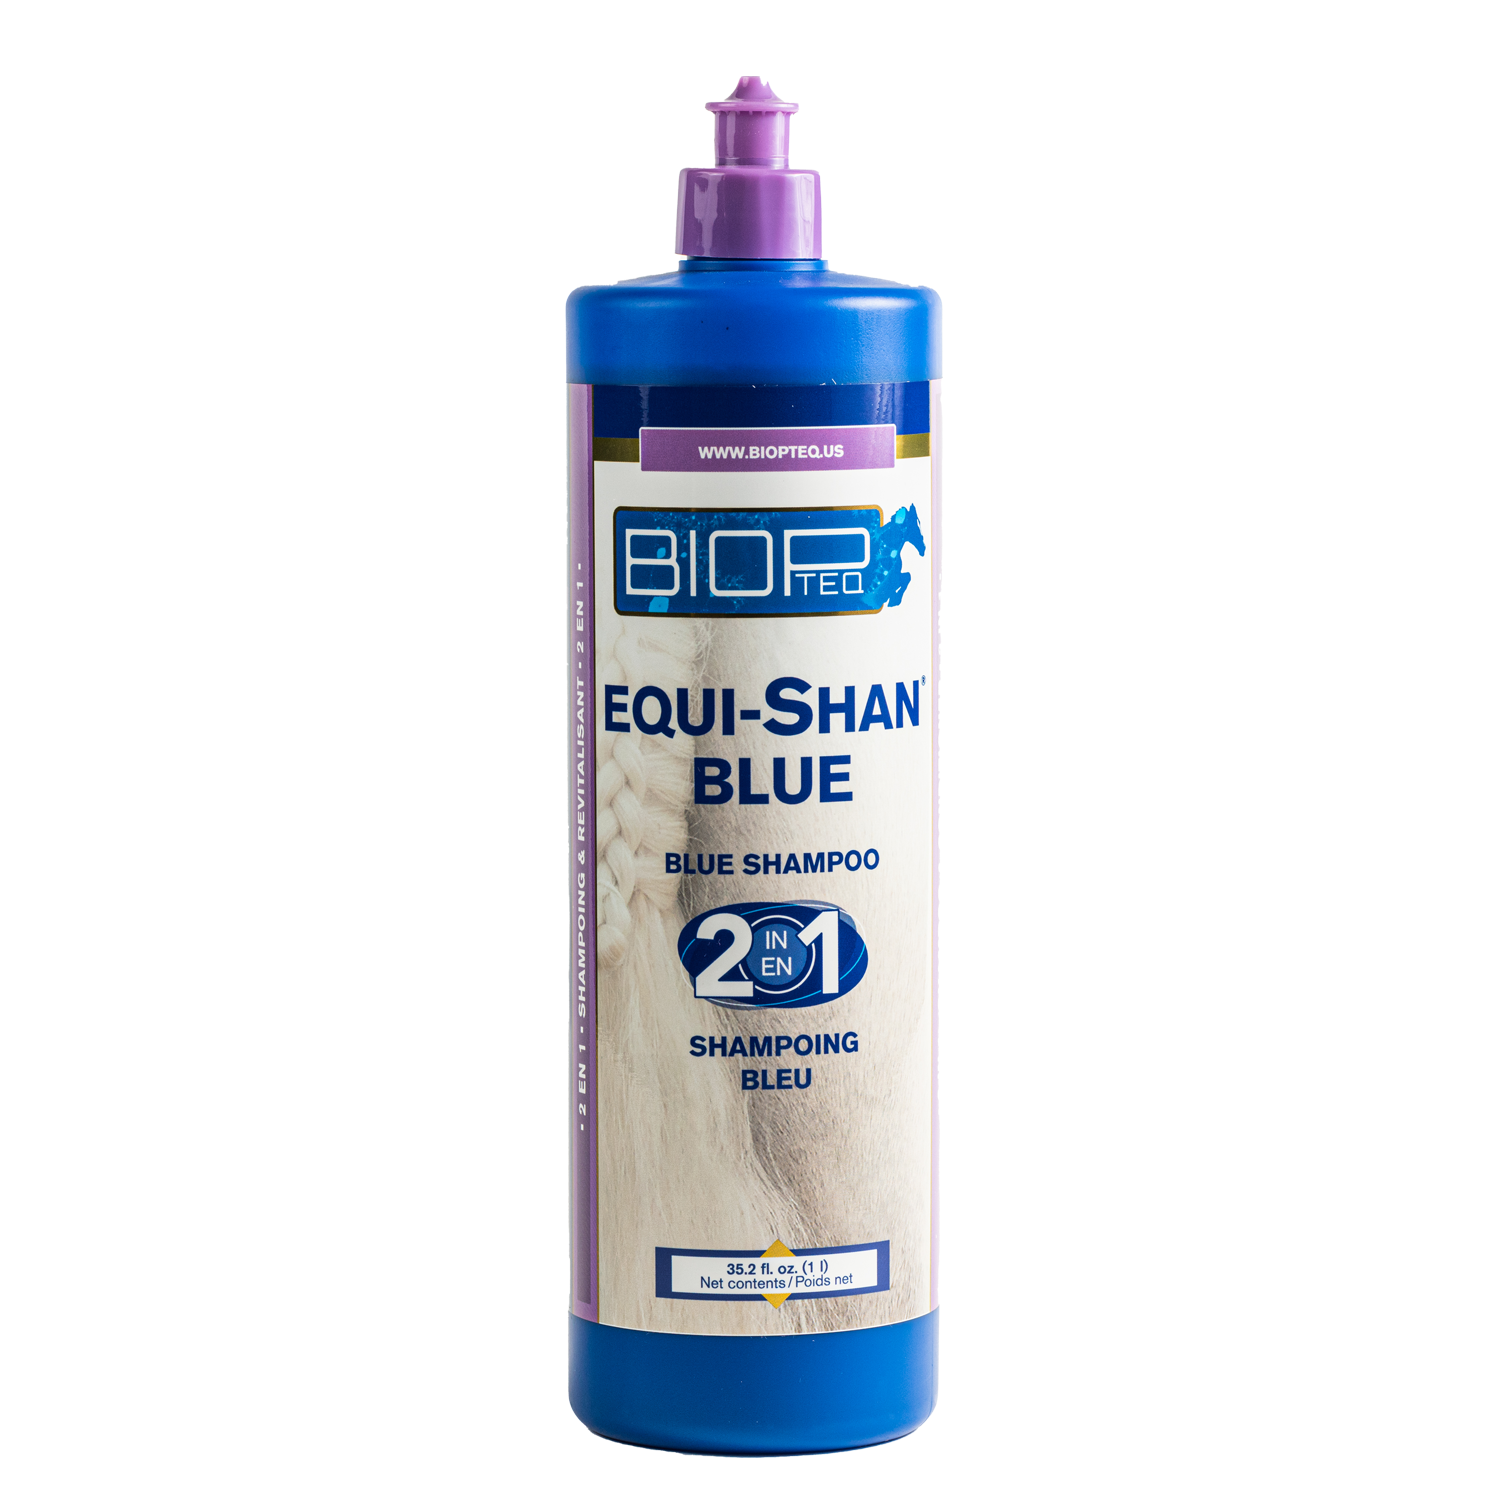 EQUI-SHAN BLUE© Shampoo FOR USA MARKET ONLY